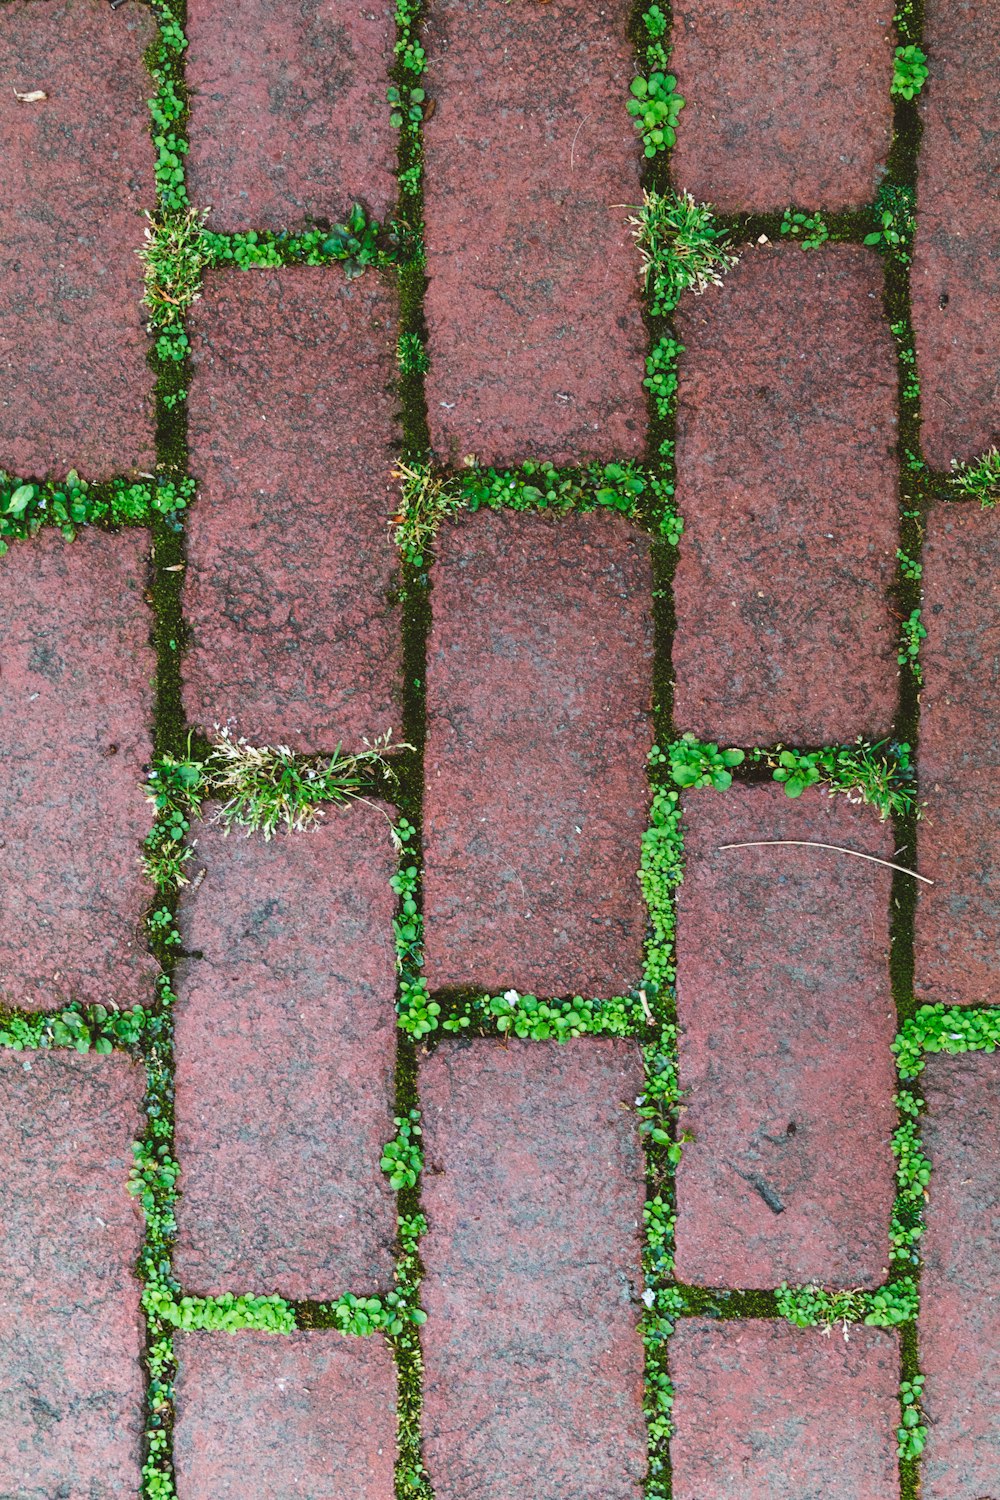 red and gray brick pavement